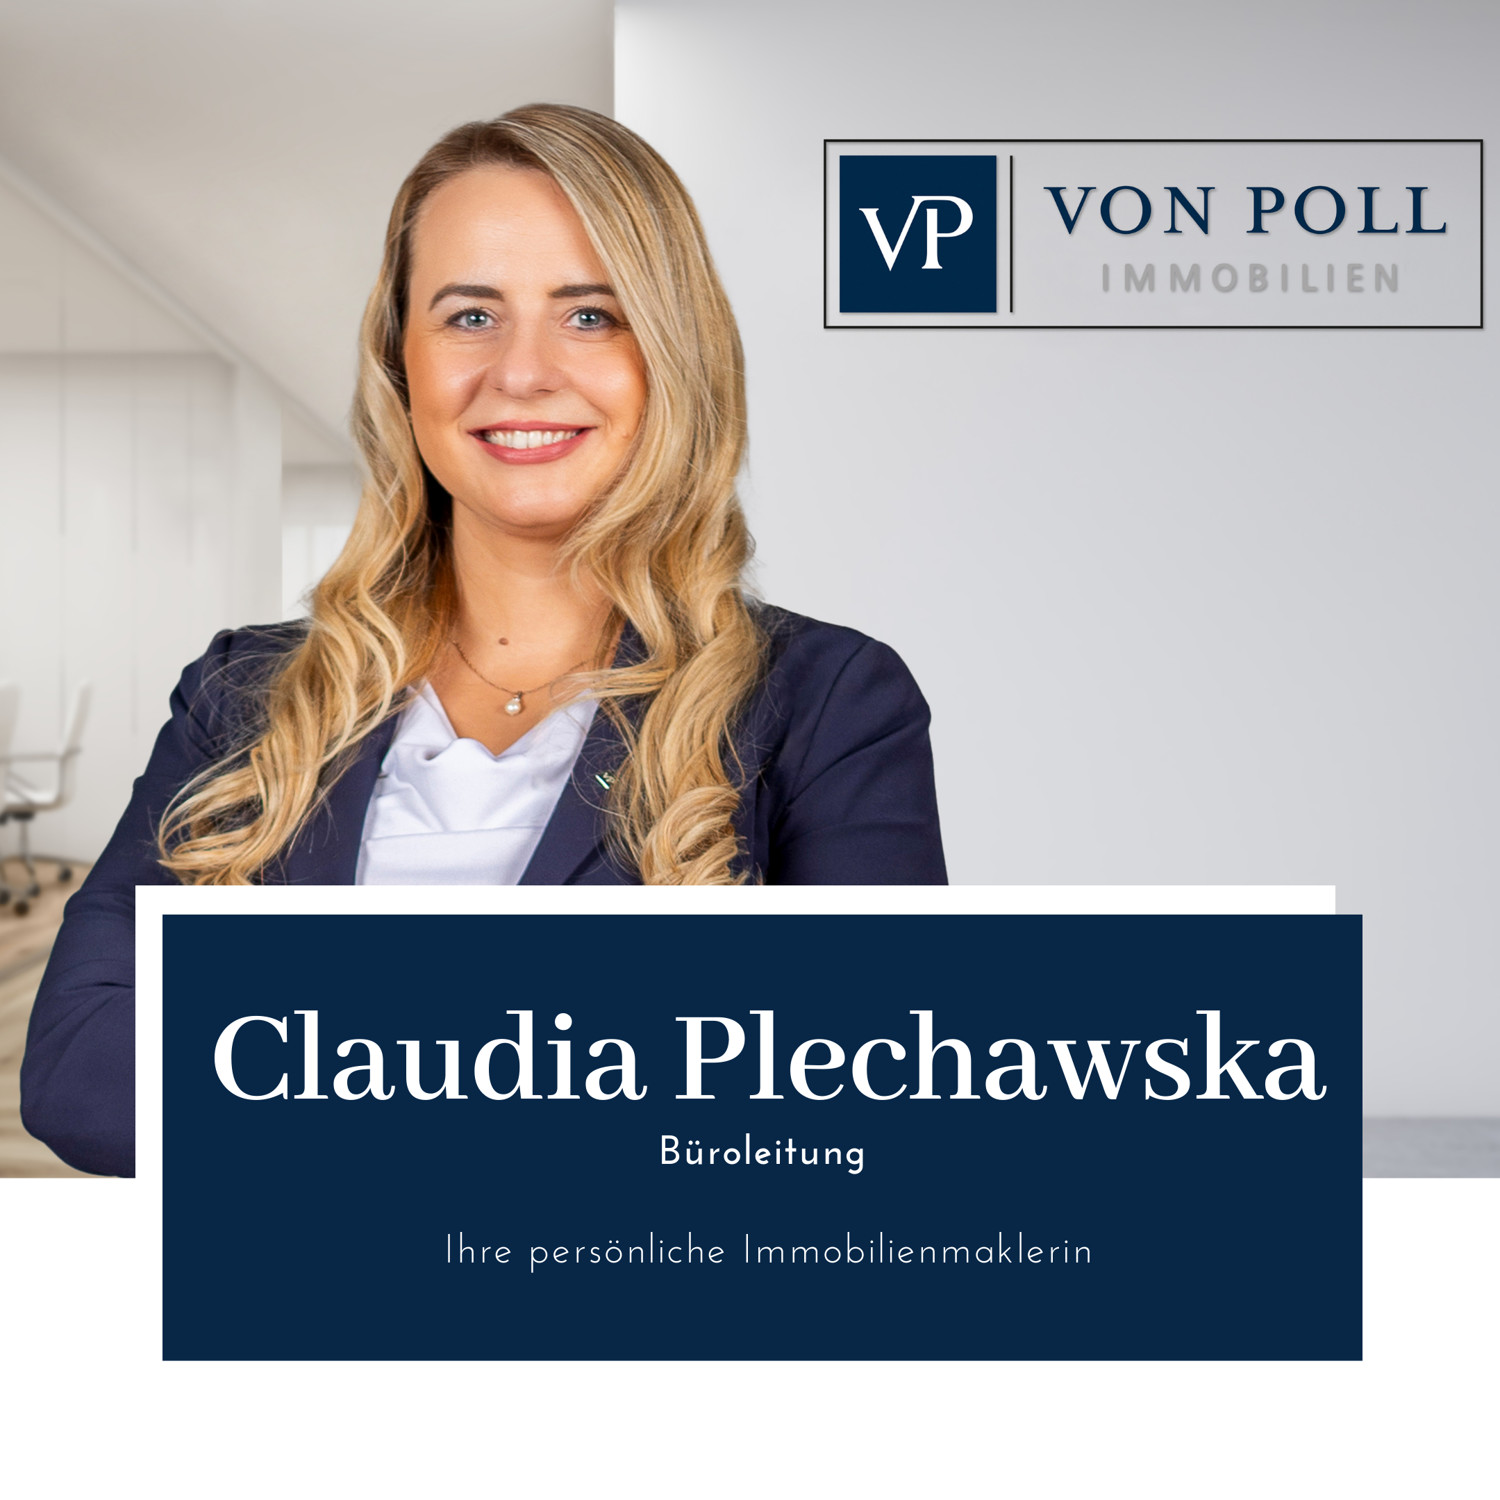 Claudia Plechawska